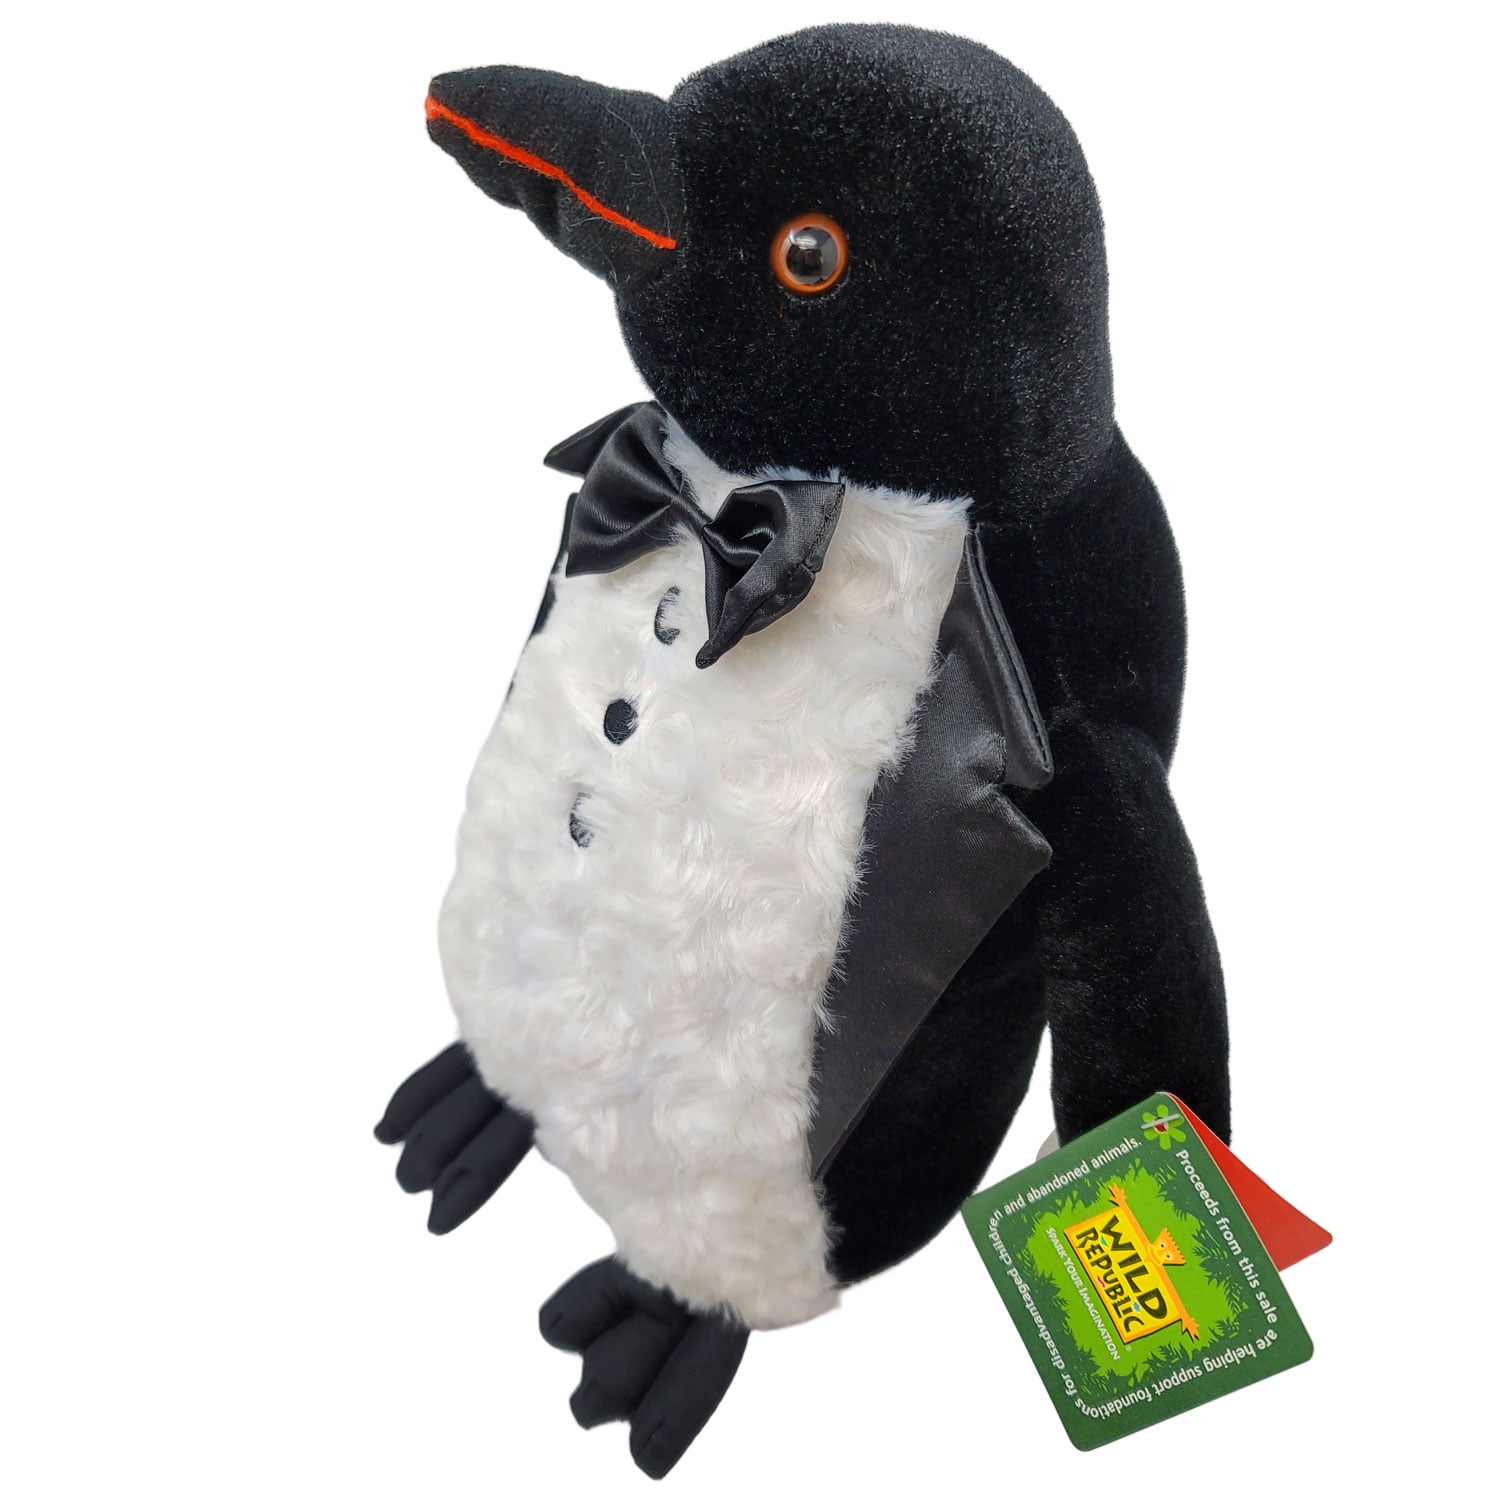 Stuffed Animal Plush Toy Gifts for Kids Wild Republic Penguin Plush Cuddlekins 8 inches